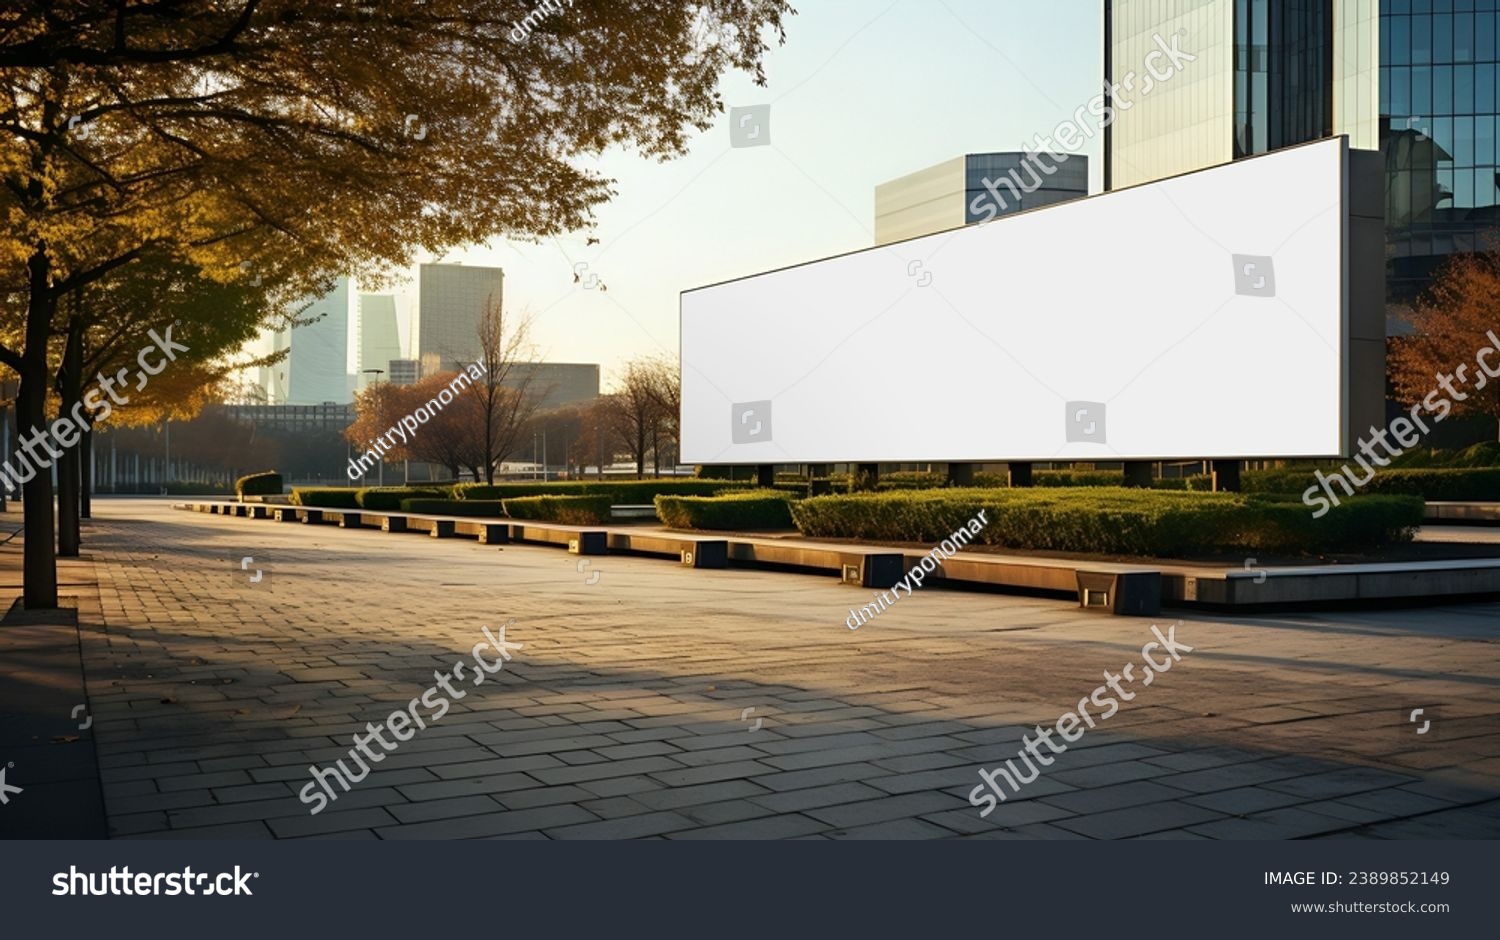 Empty billboard outdoor mockup in city center uptown sidewalk  #2389852149